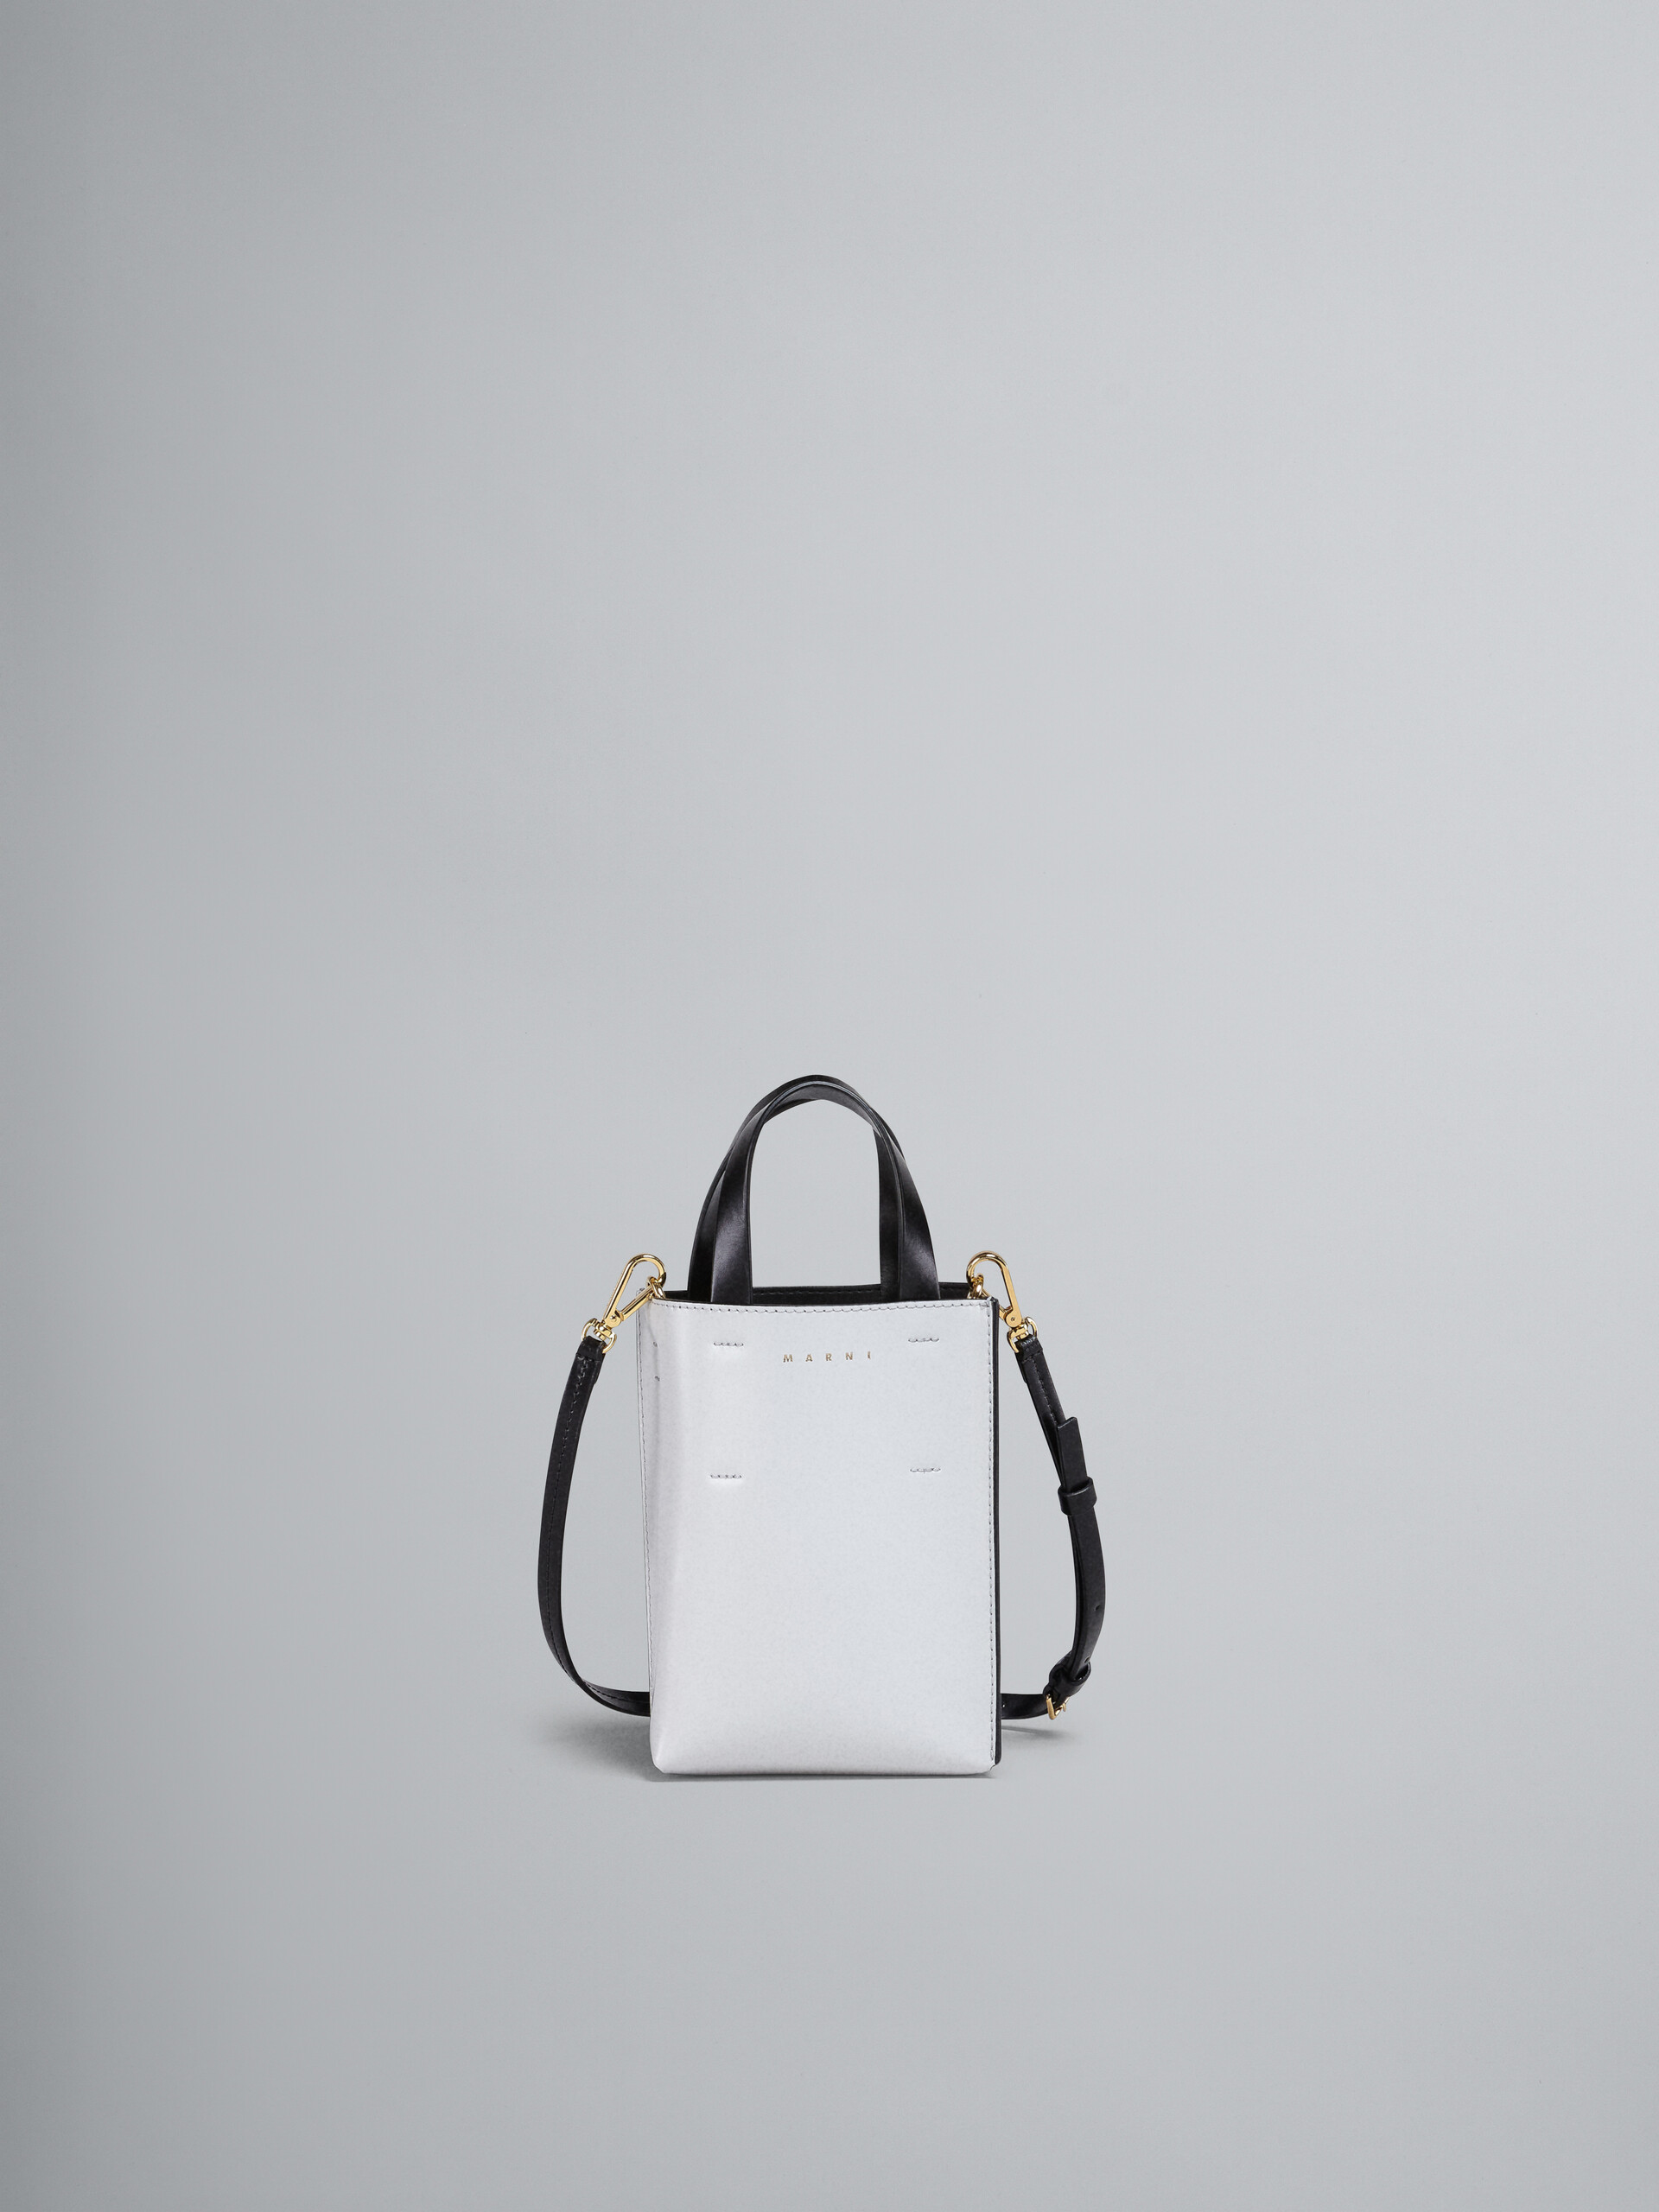 MUSEO nano bag in white and black leather | Marni